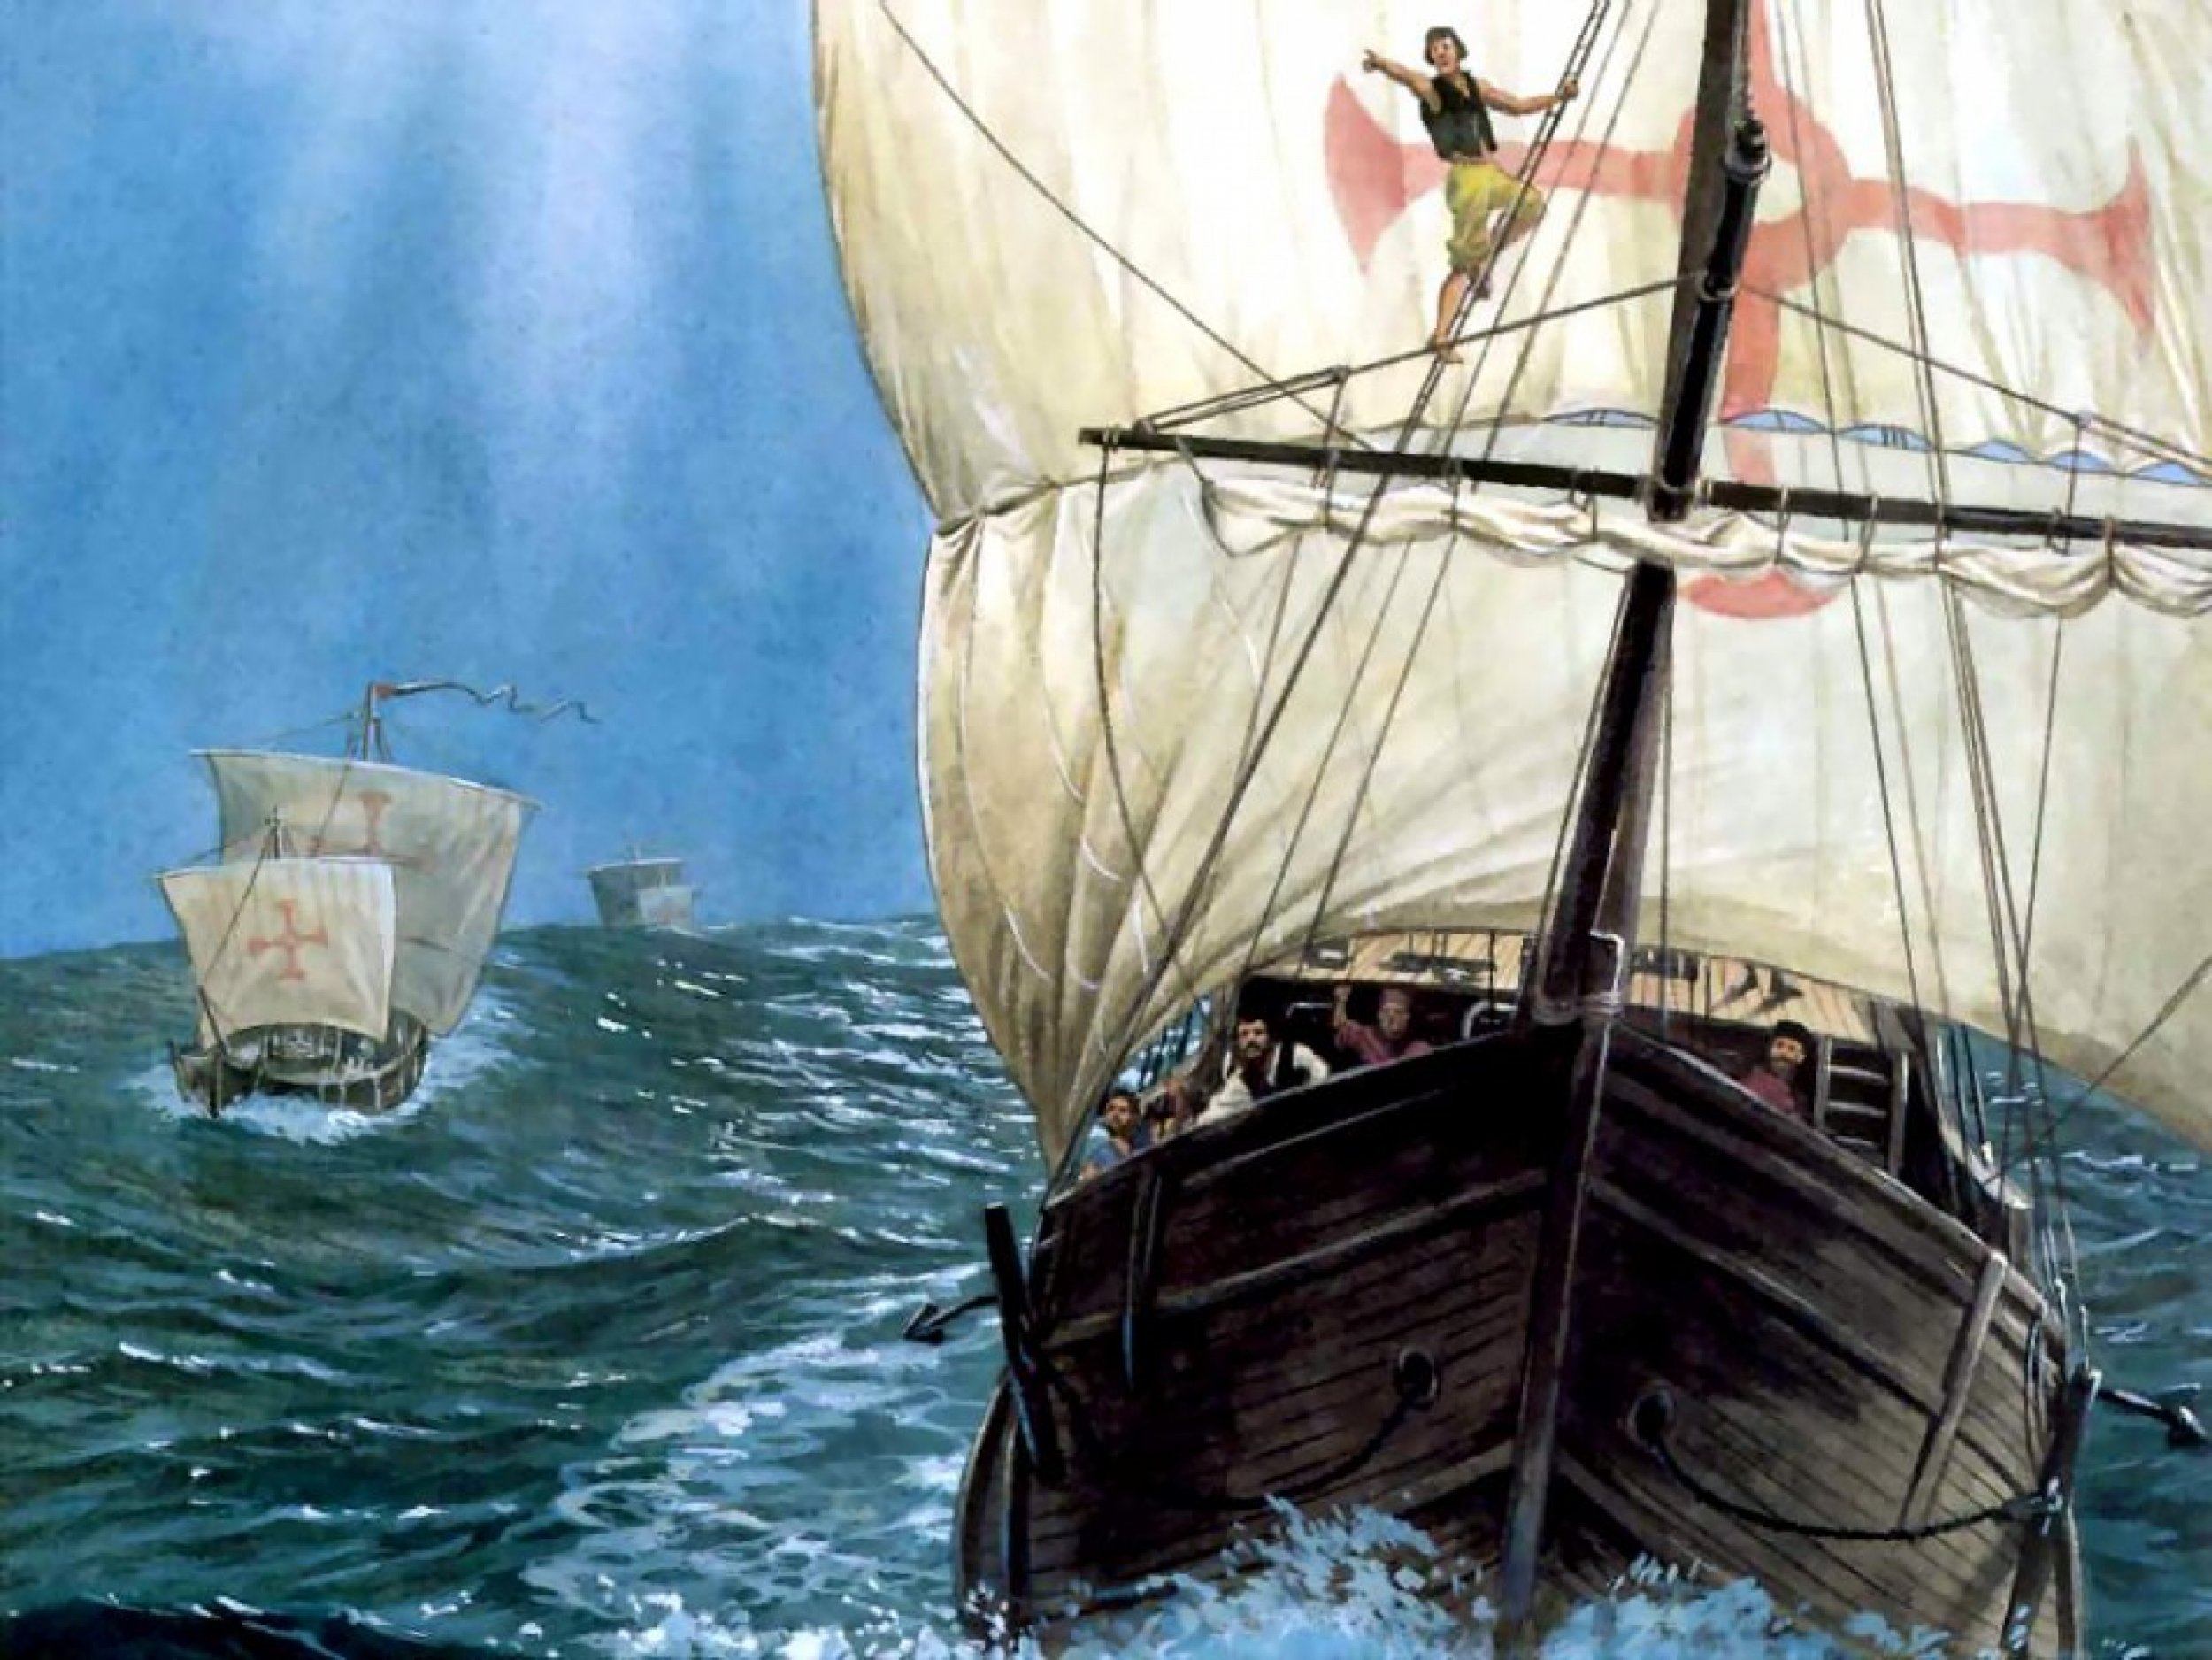 MYTH Columbus sailed on the Nia, the Pinta, and the Santa Maria.